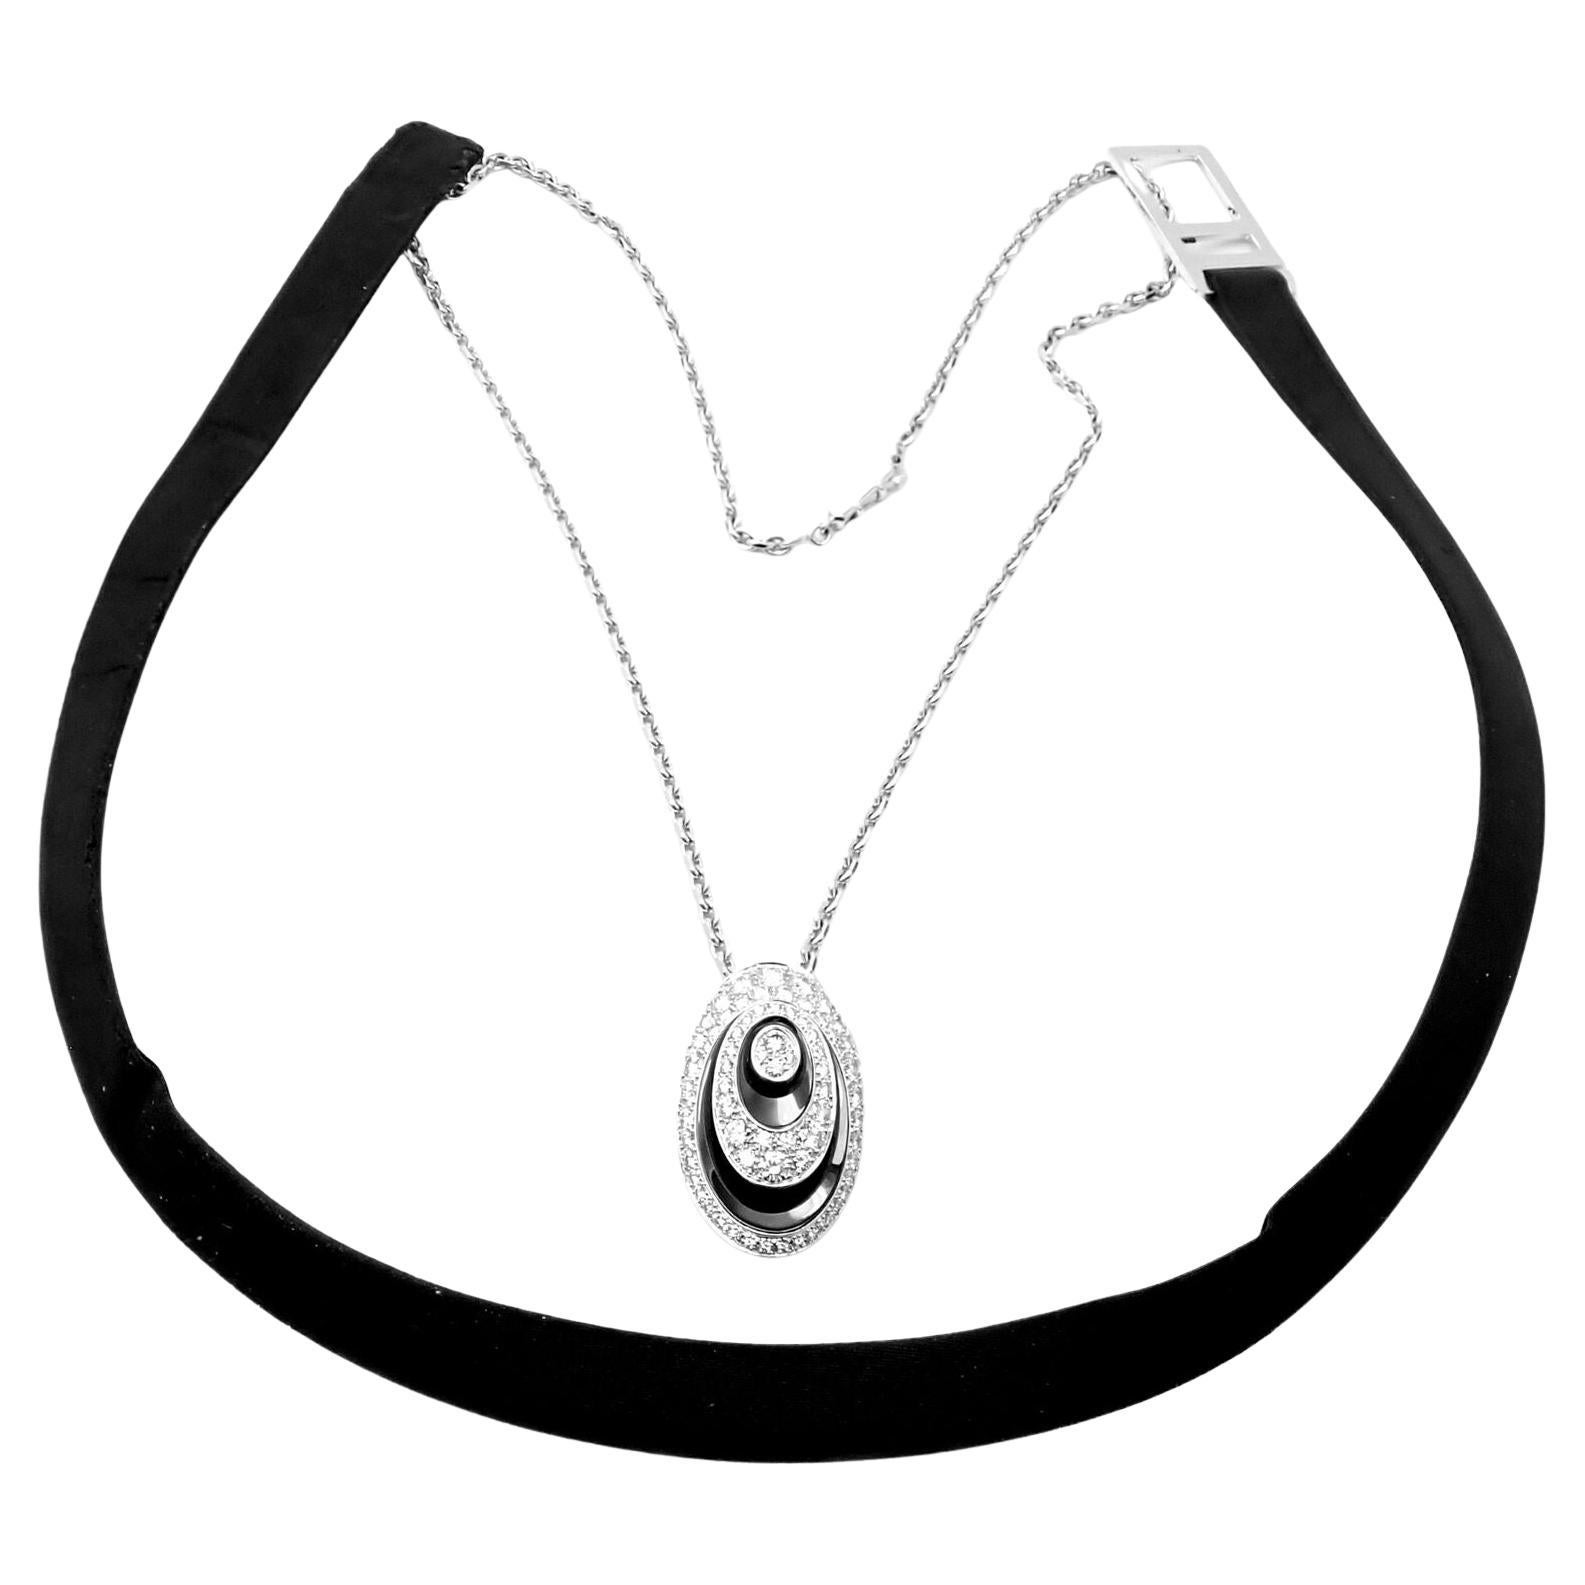 Cartier, collier pendentif hypnose en or blanc, chaîne et cordon de soie en vente